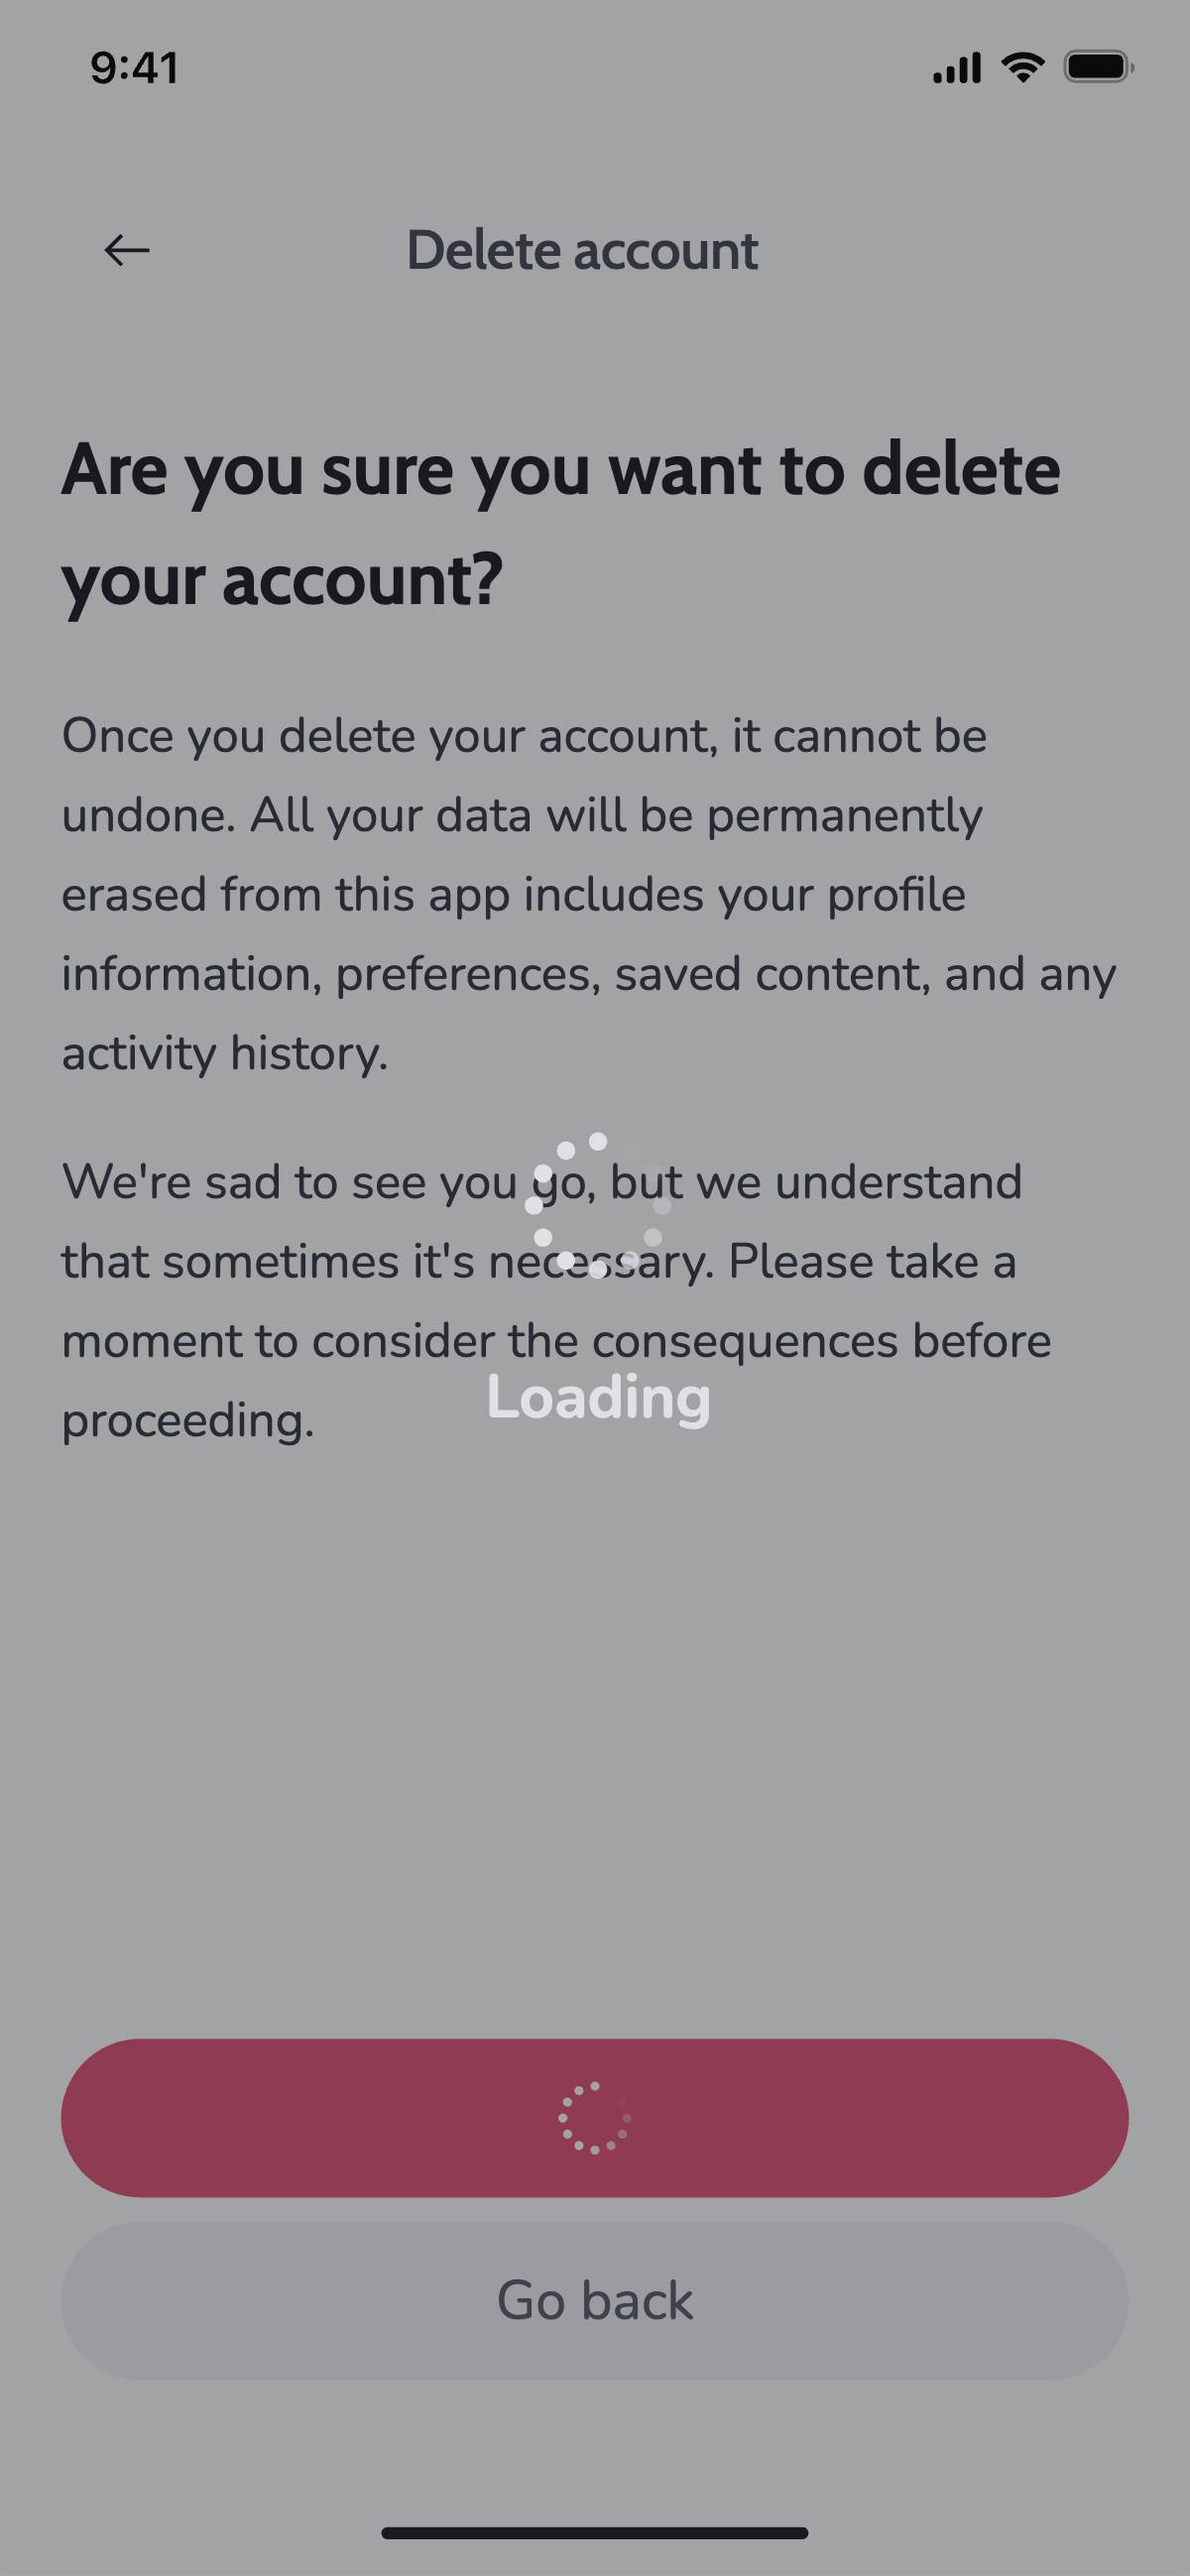 Delete account - Loading